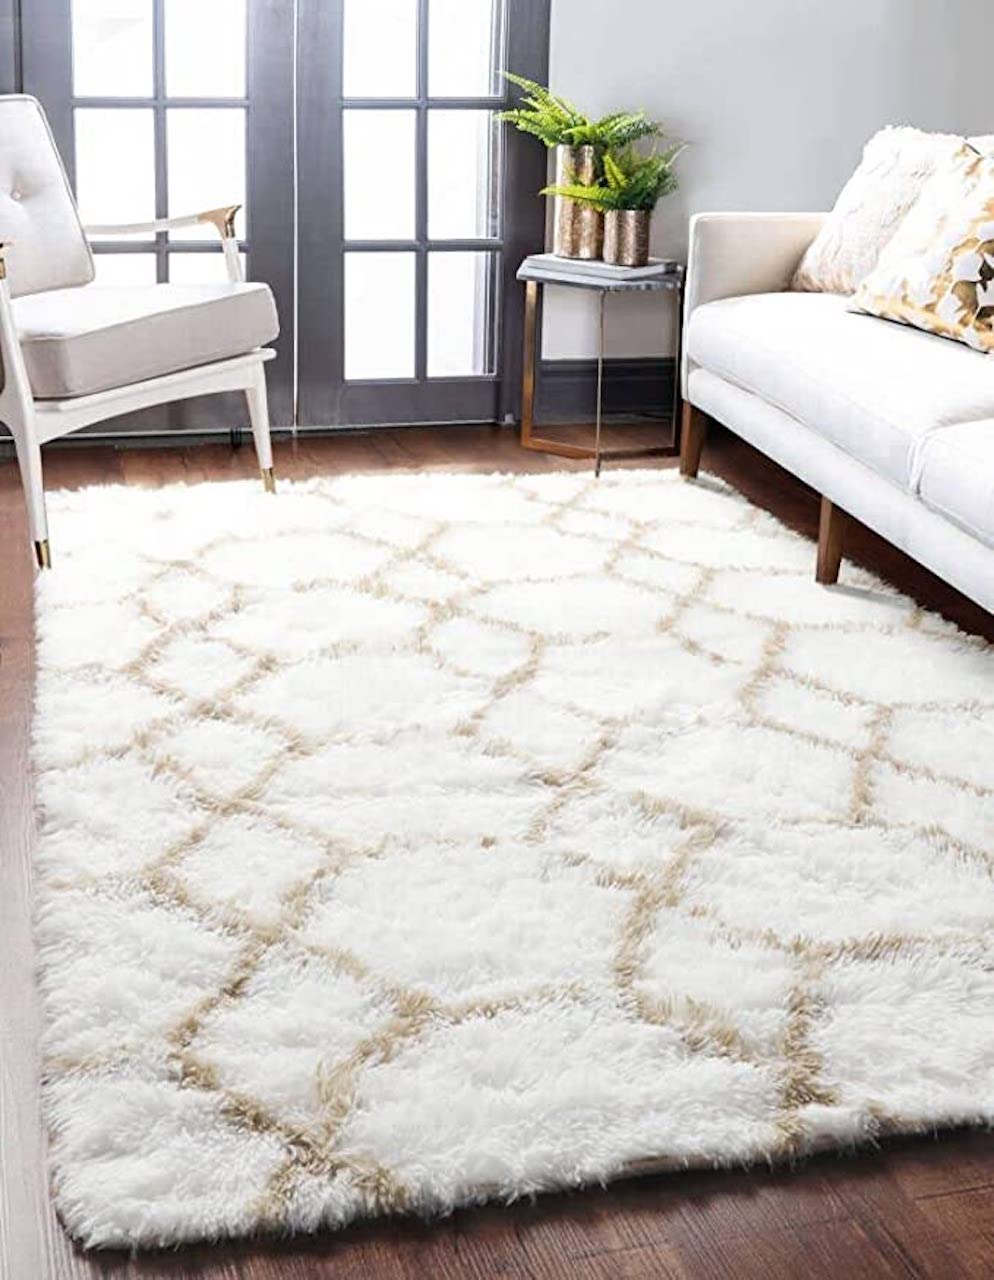 office decor to boost energy shag rug